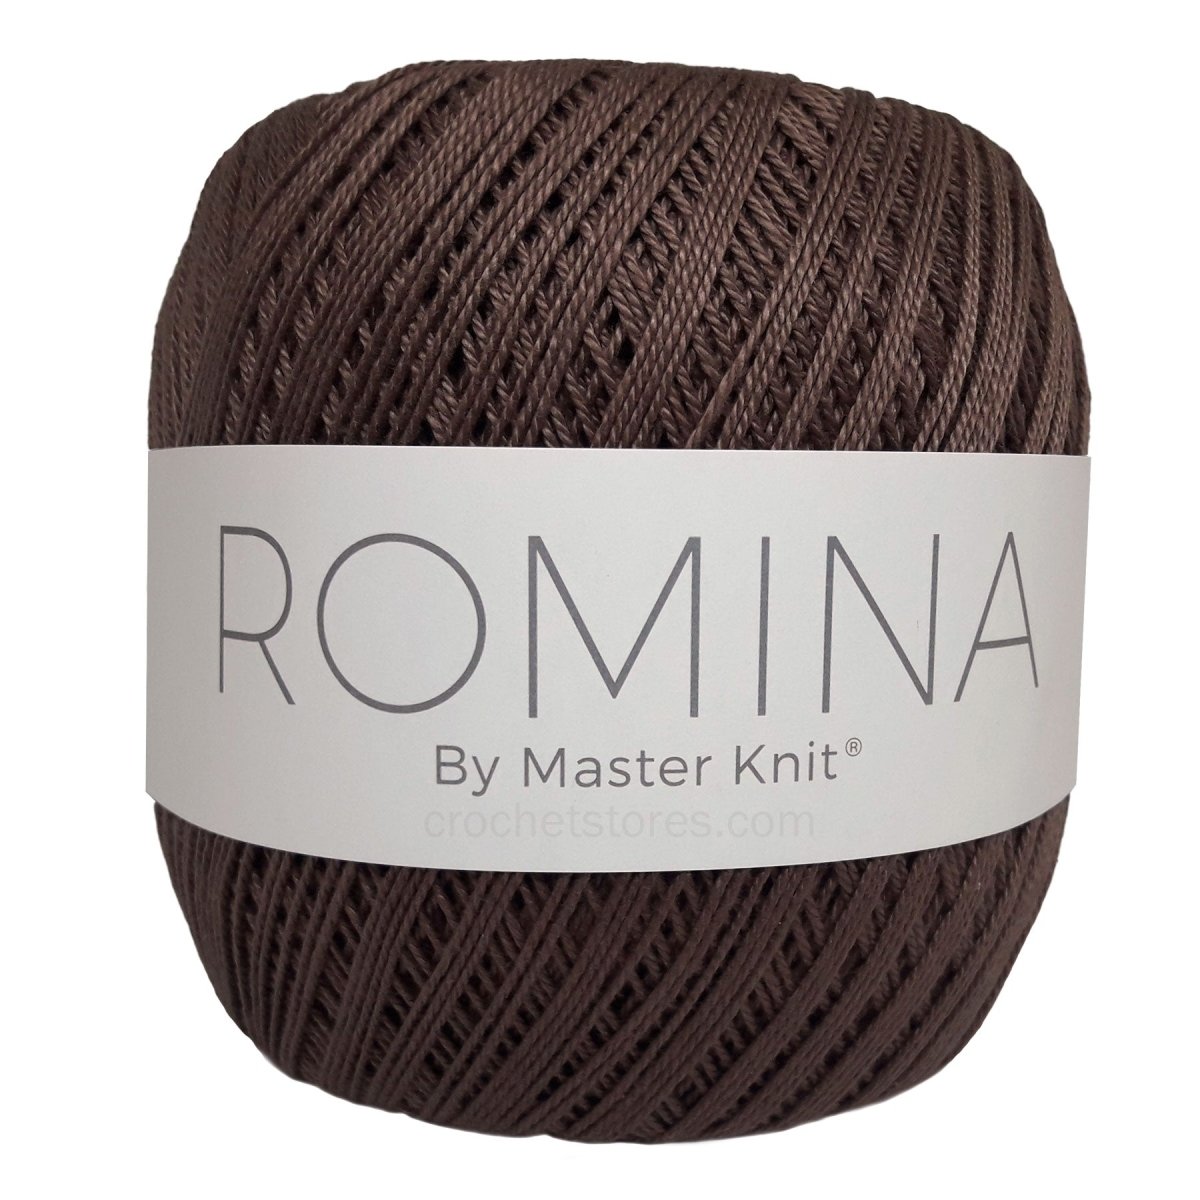 ROMINA - Crochetstores9335-886745051438715